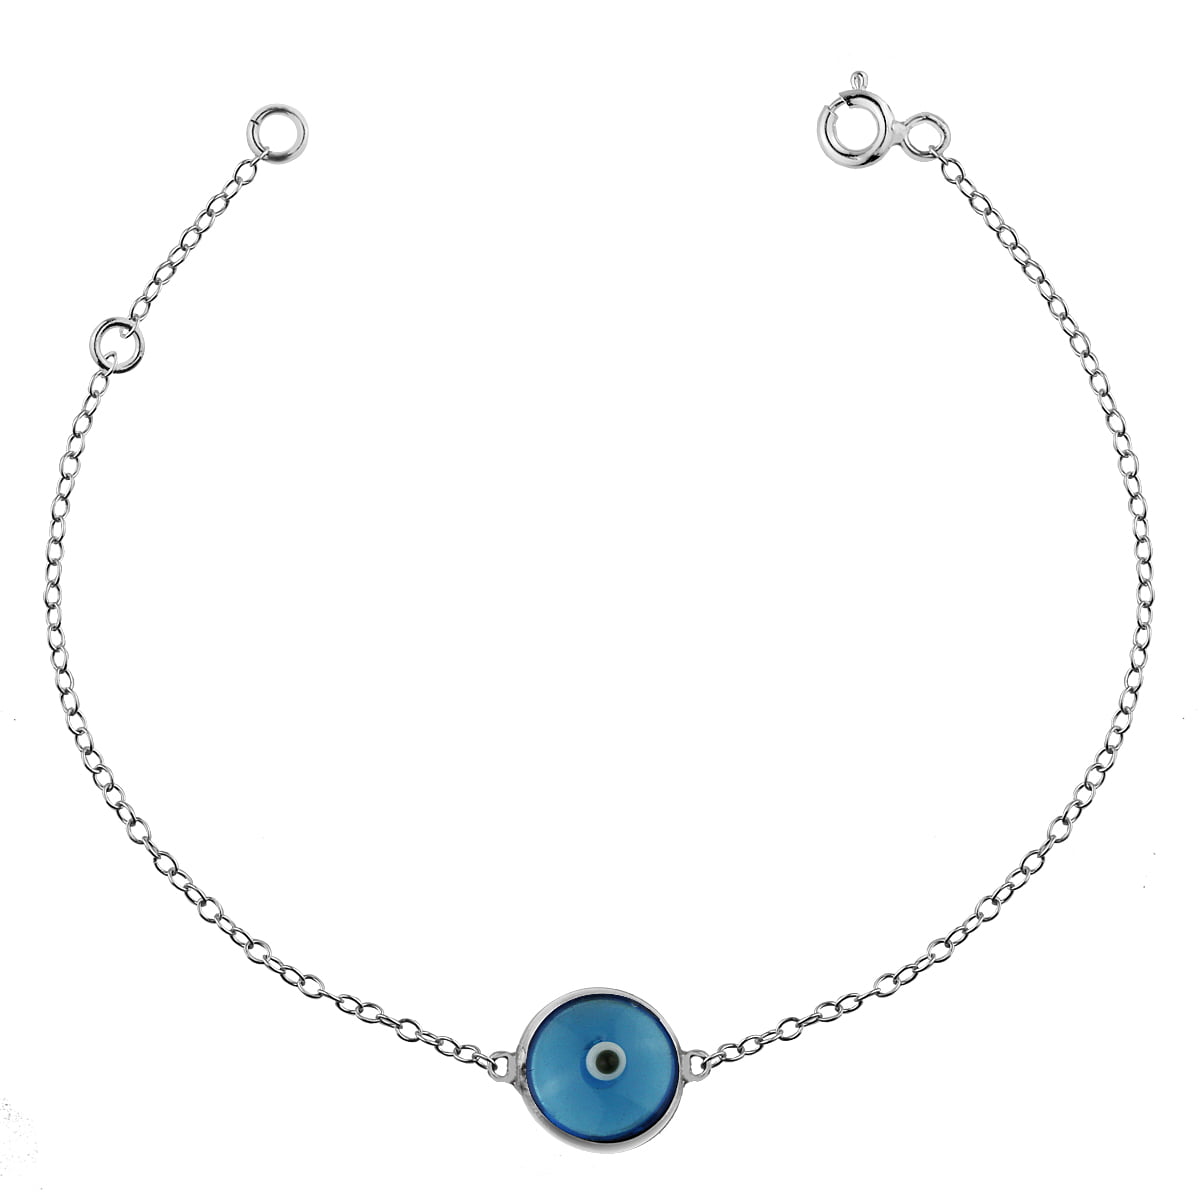 Bracelet handmade of silver 925 with light blue glass eye